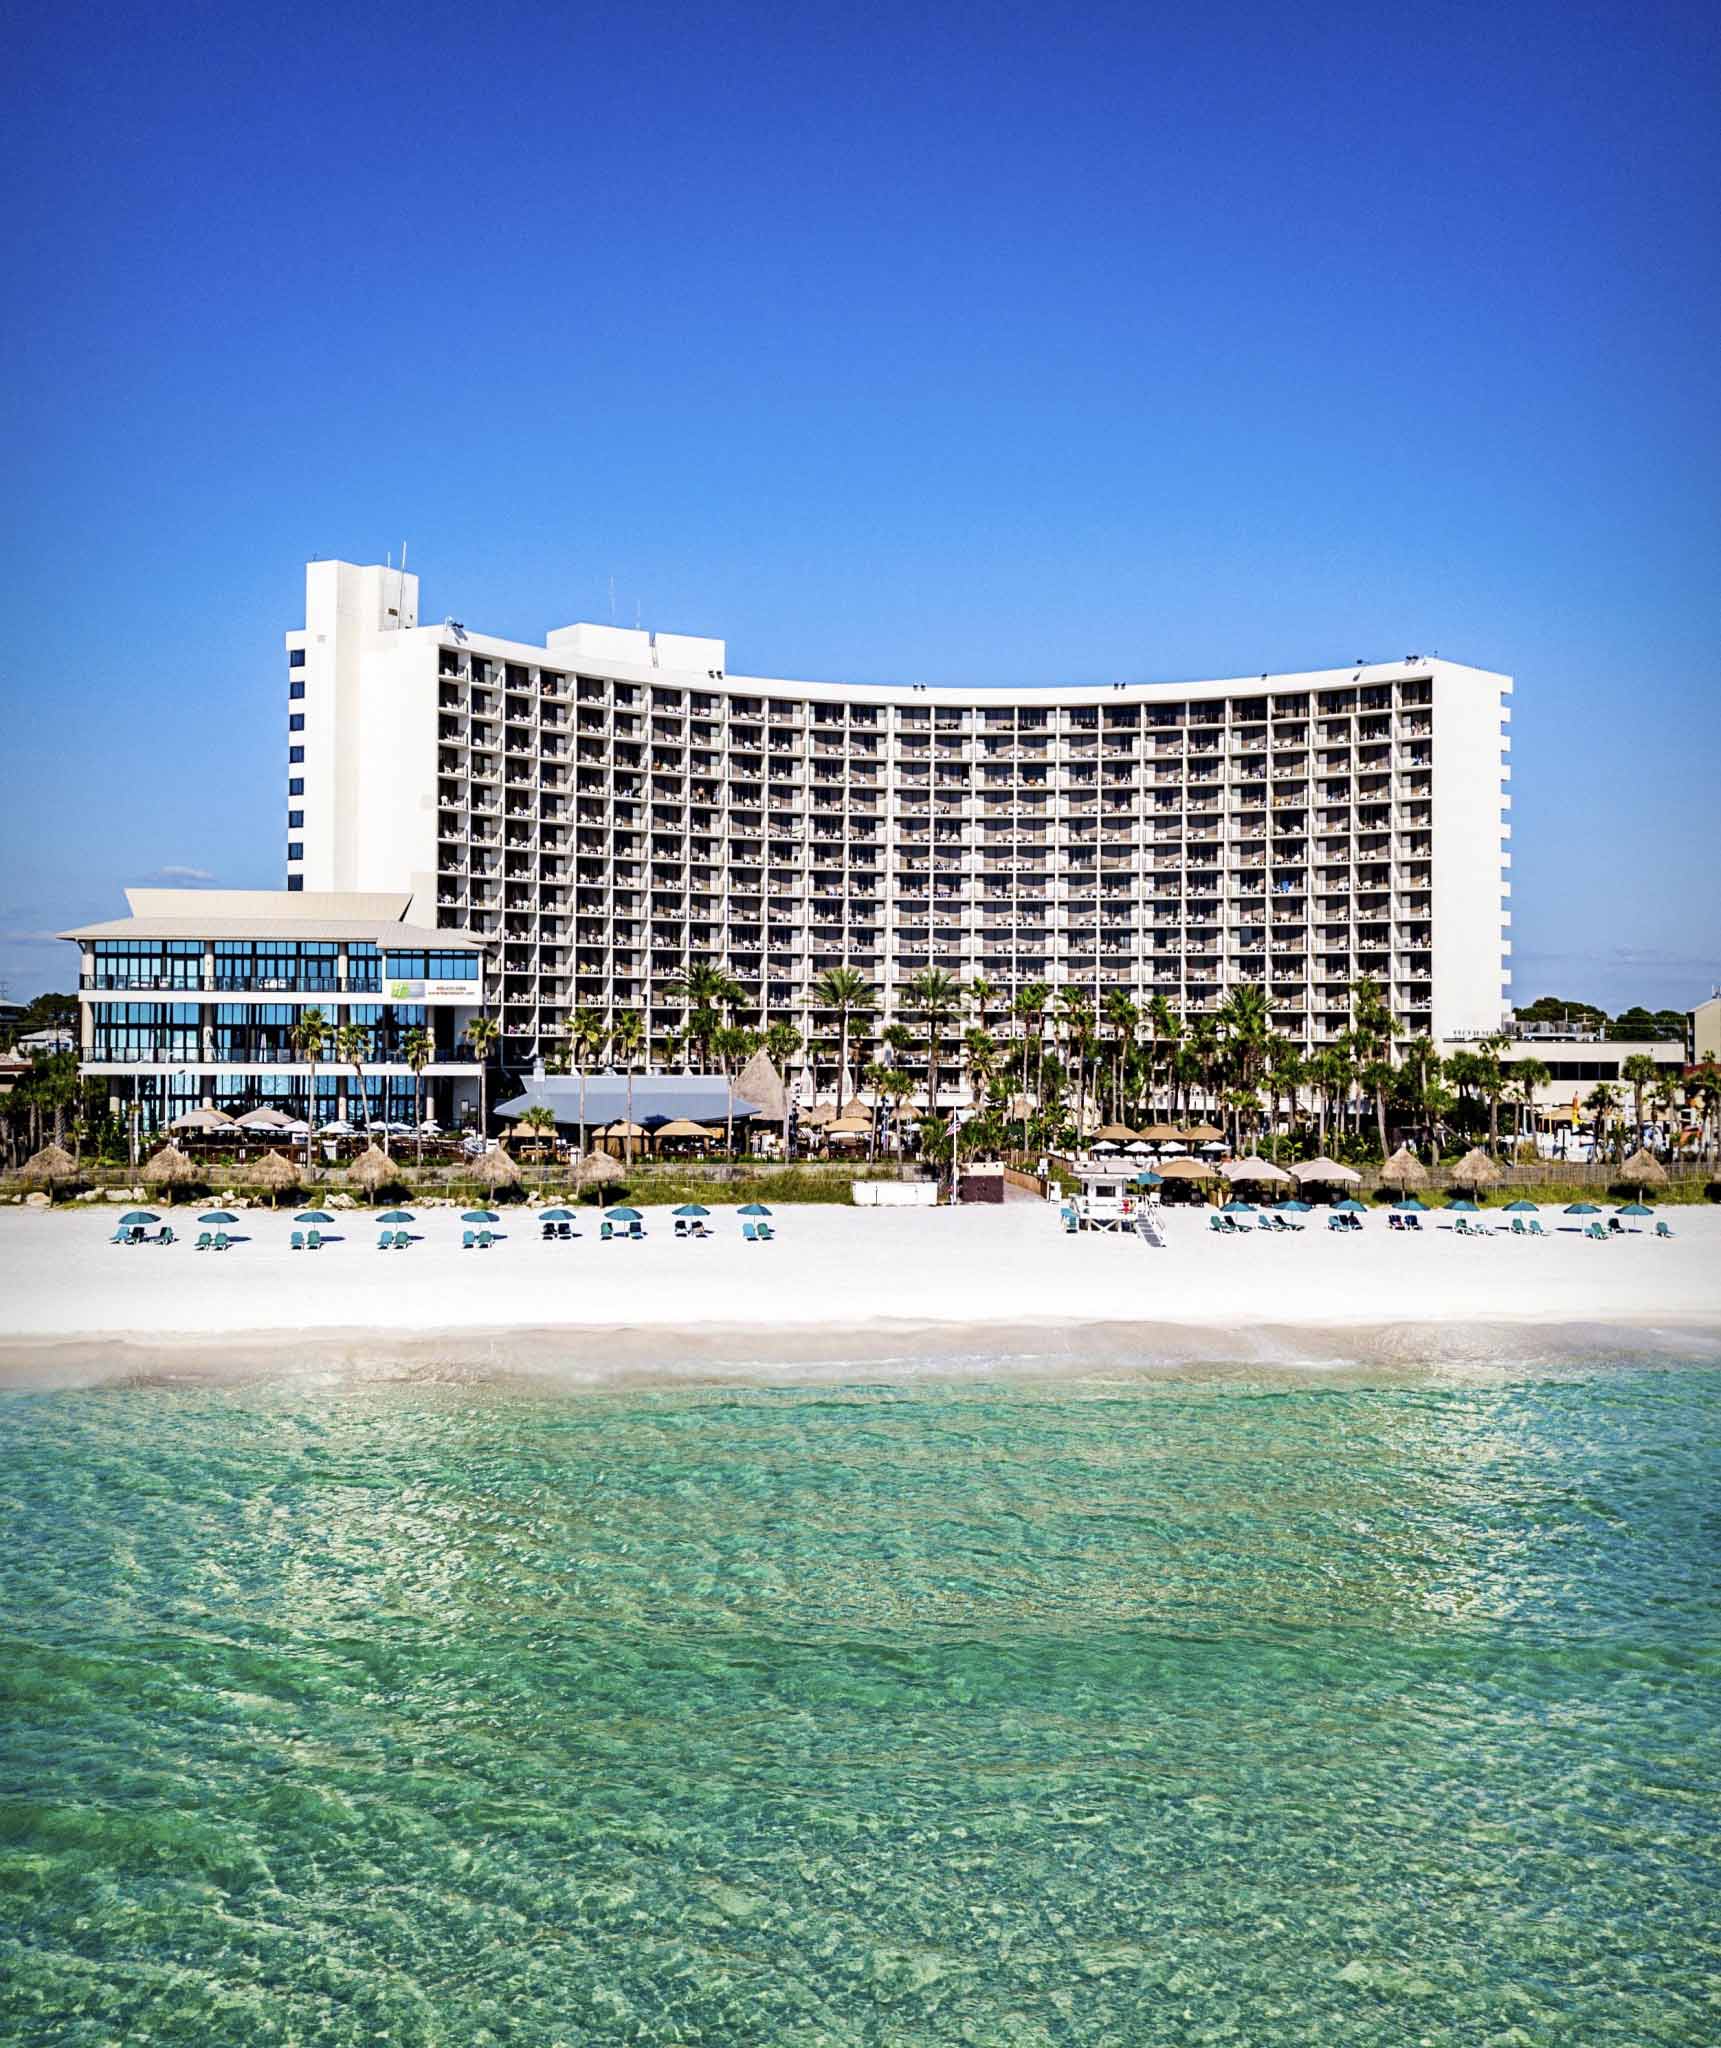 Holiday Inn Resort Panama City Beach Exterior 01 